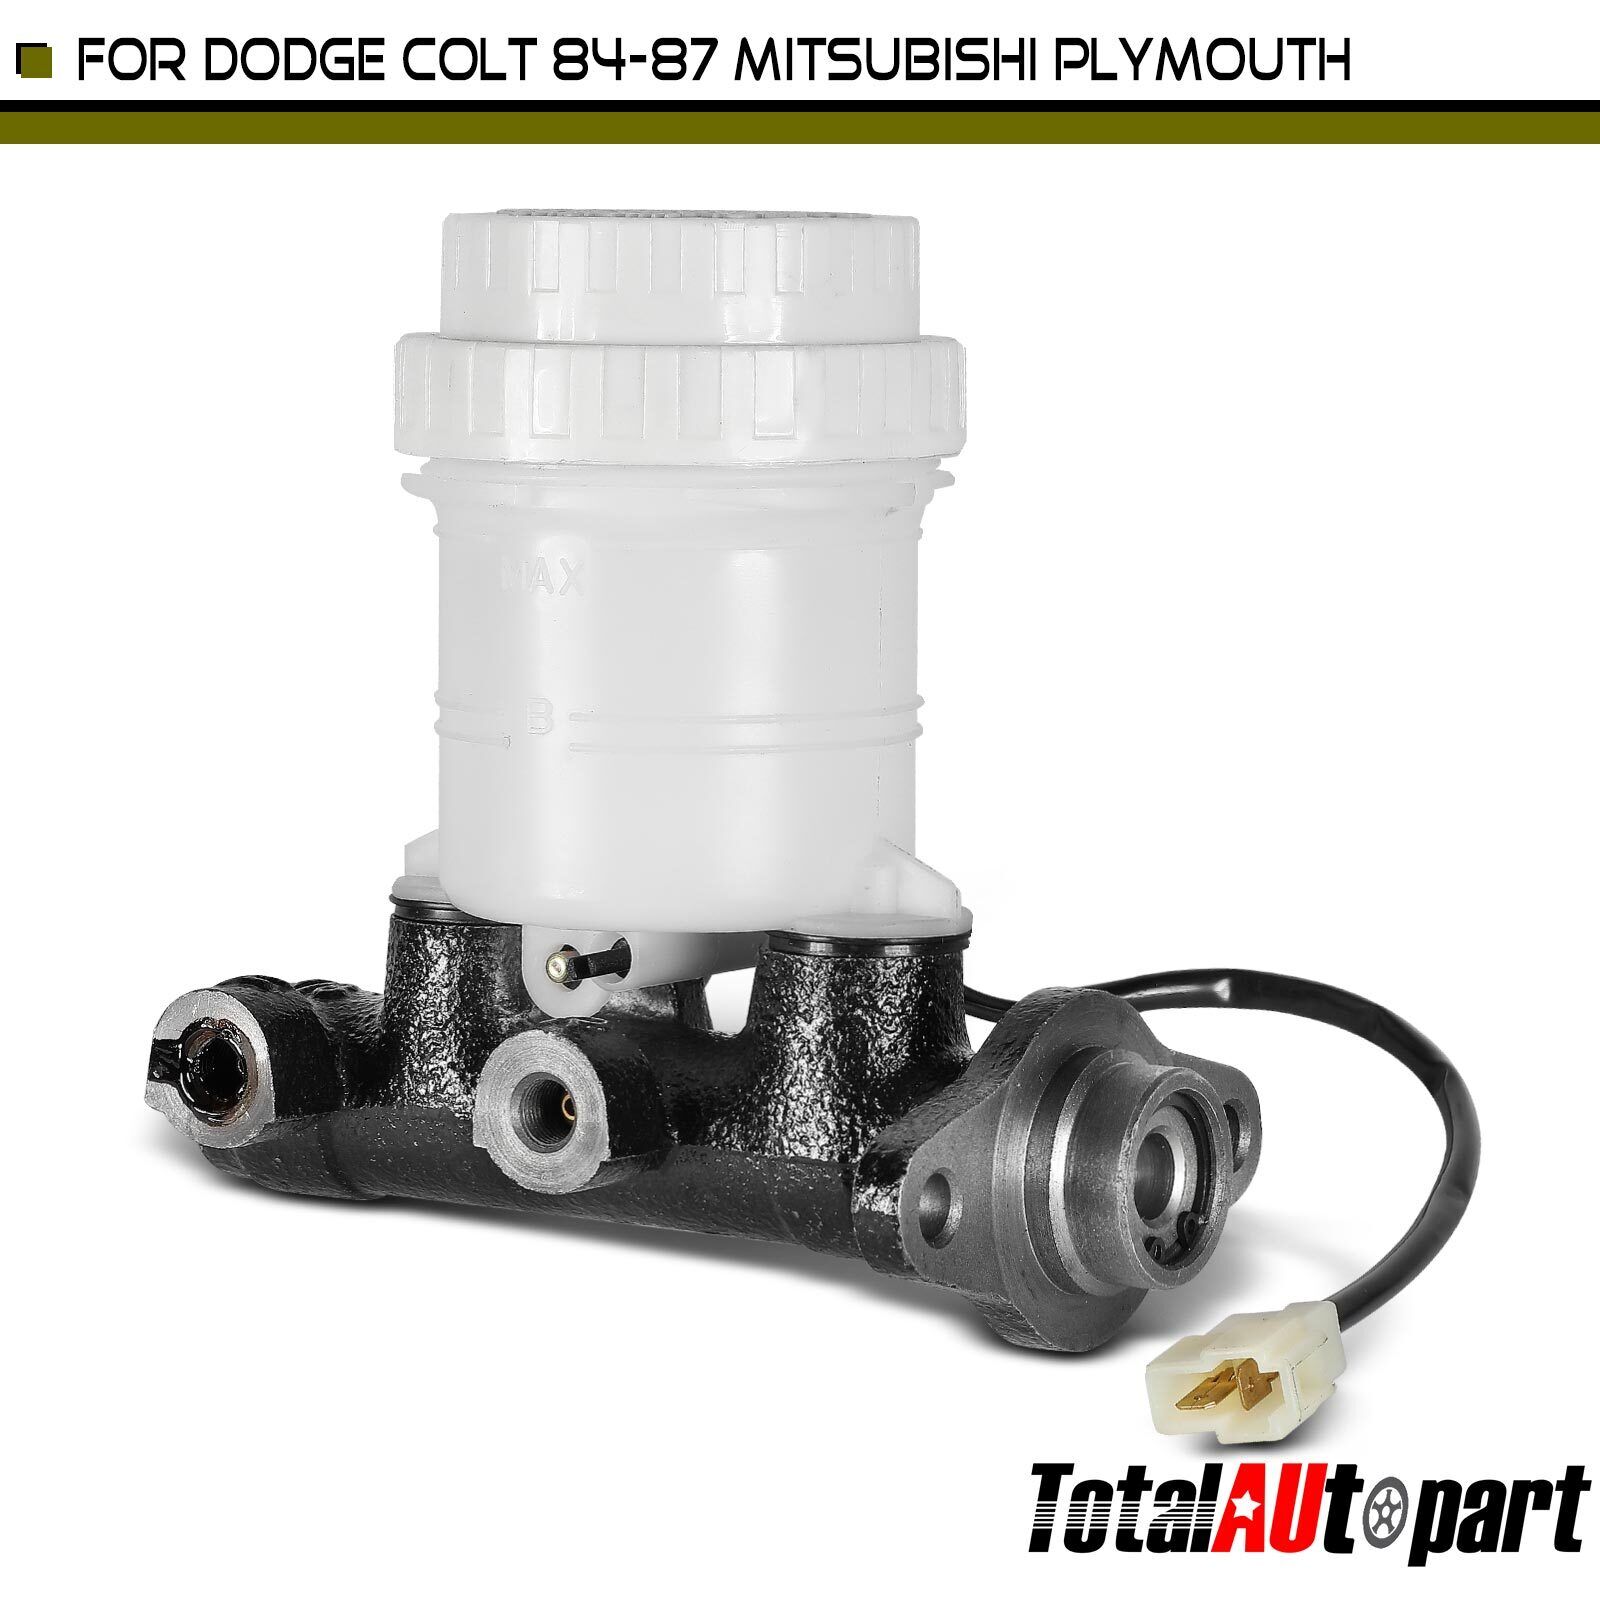 New Brake Master Cylinder w/ Reservoir for Dodge Colt Mitsubishi Cordia Plymouth